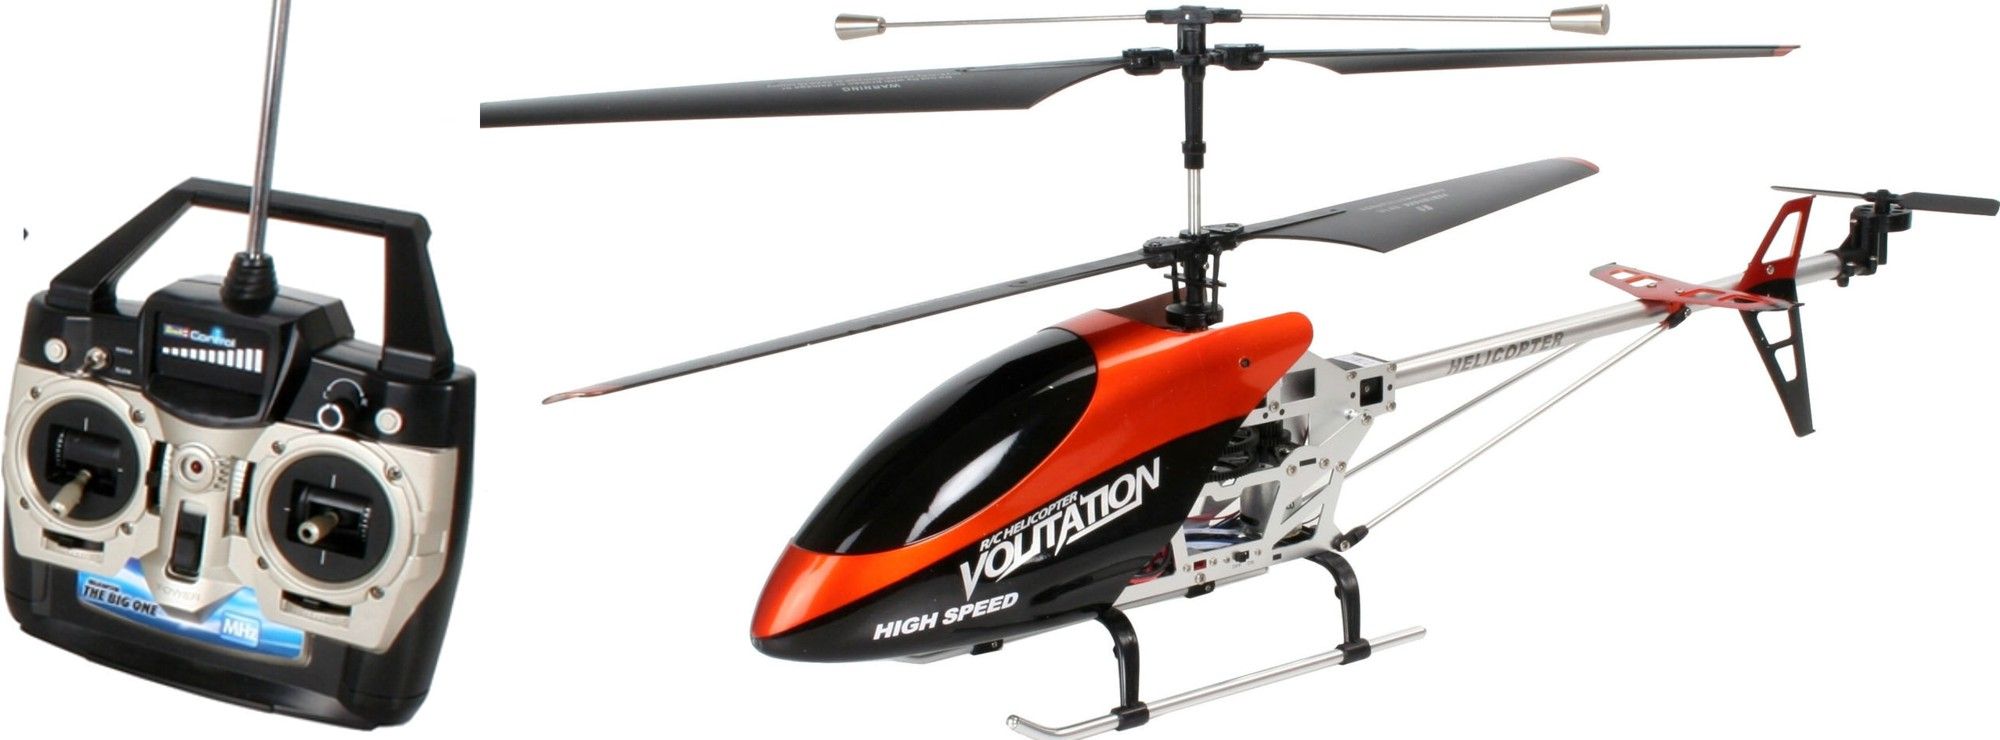 revell-24056-big-one-helikopter-rtf-mode